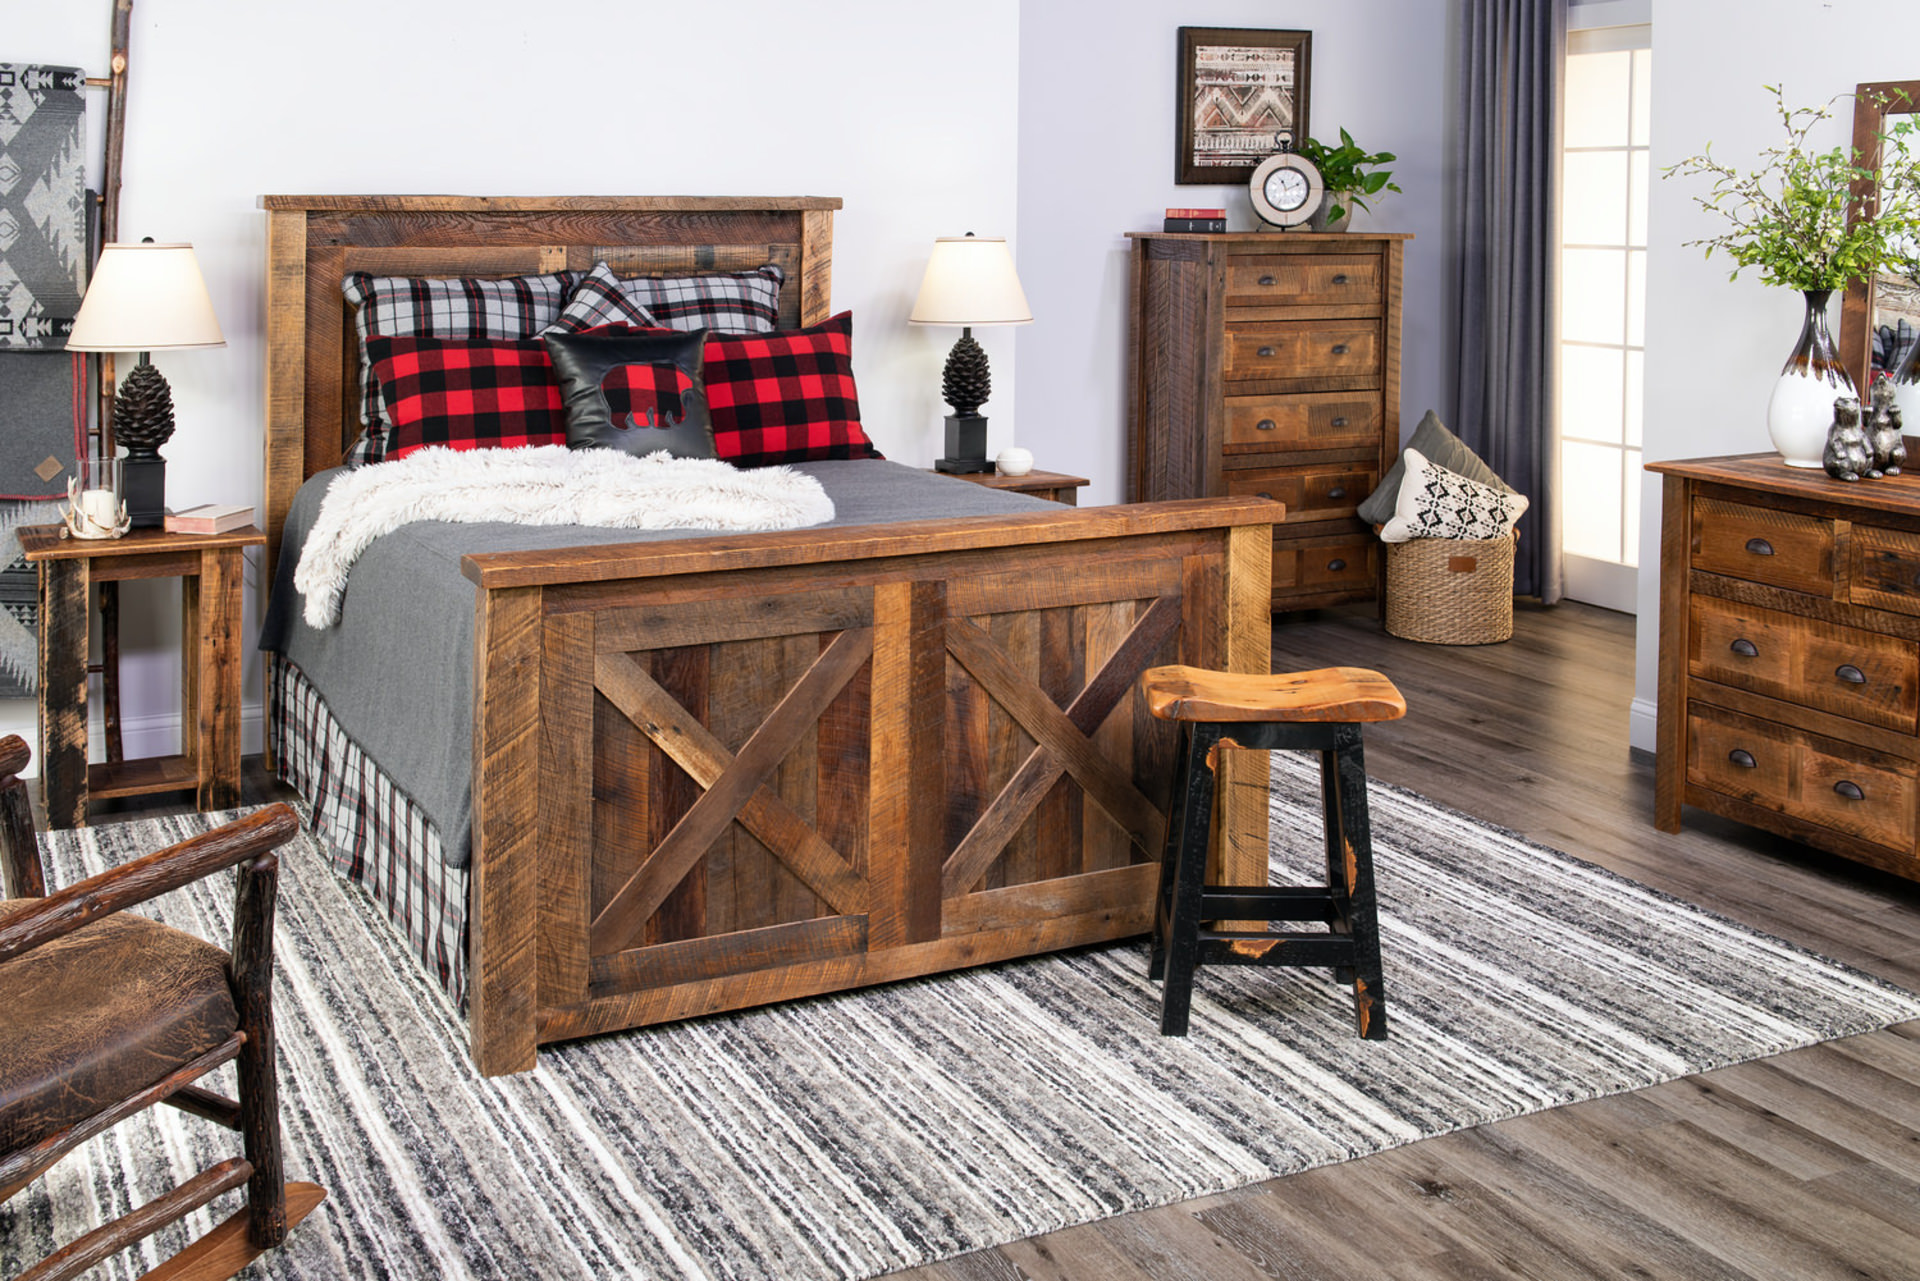 Cozy Cabin Decor - design blog by HOM Furniture